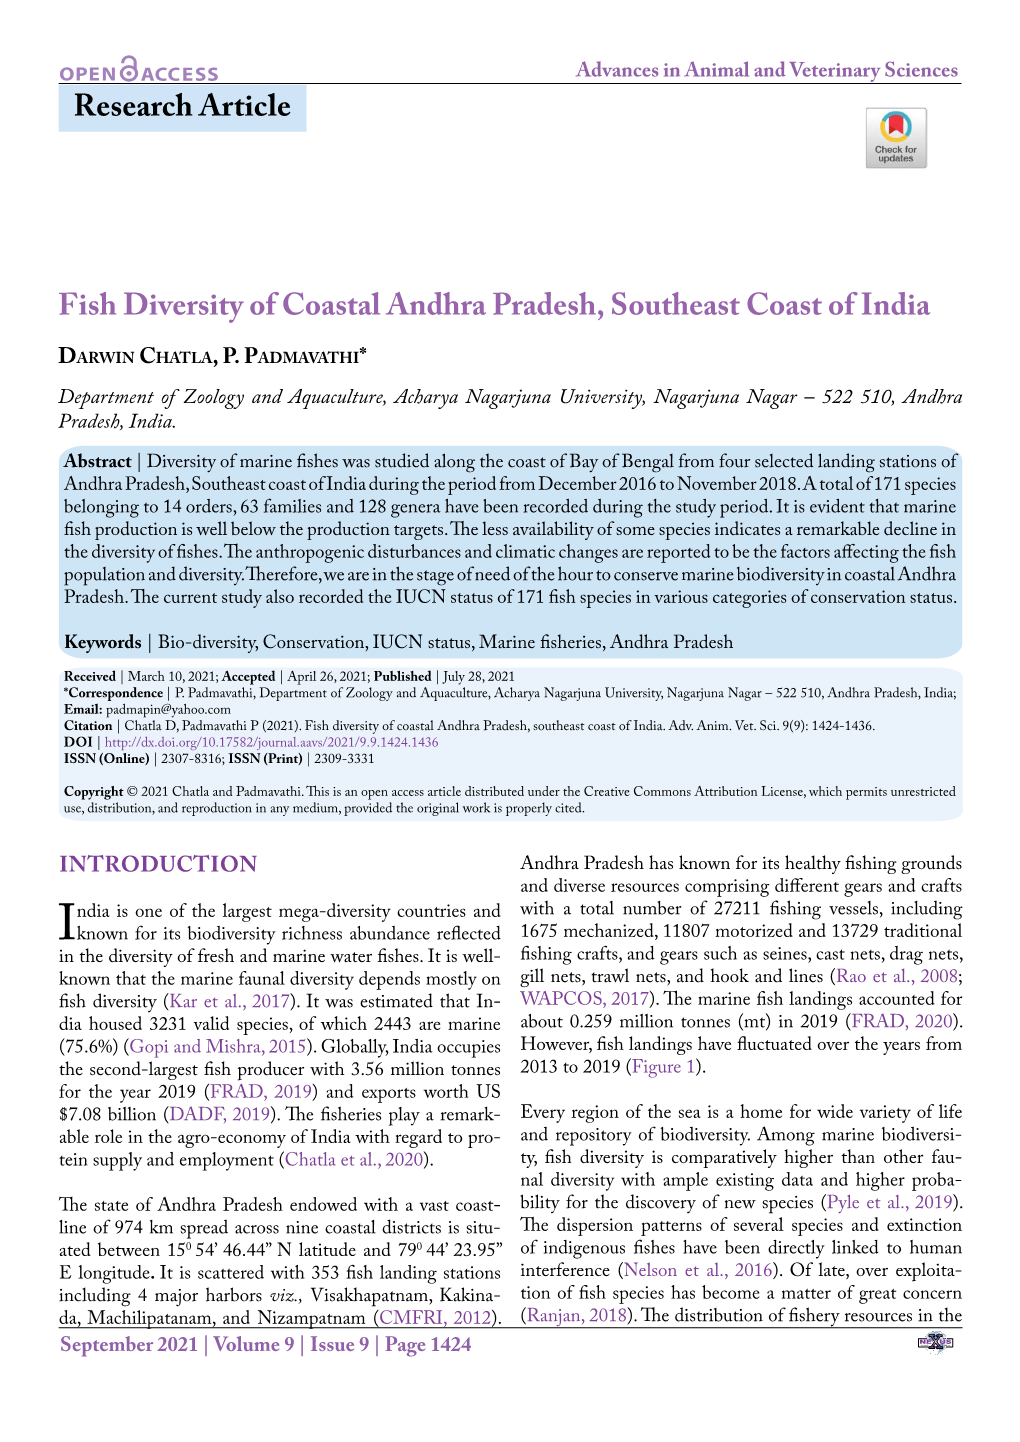 Fish Diversity of Coastal Andhra Pradesh, Southeast Coast of India